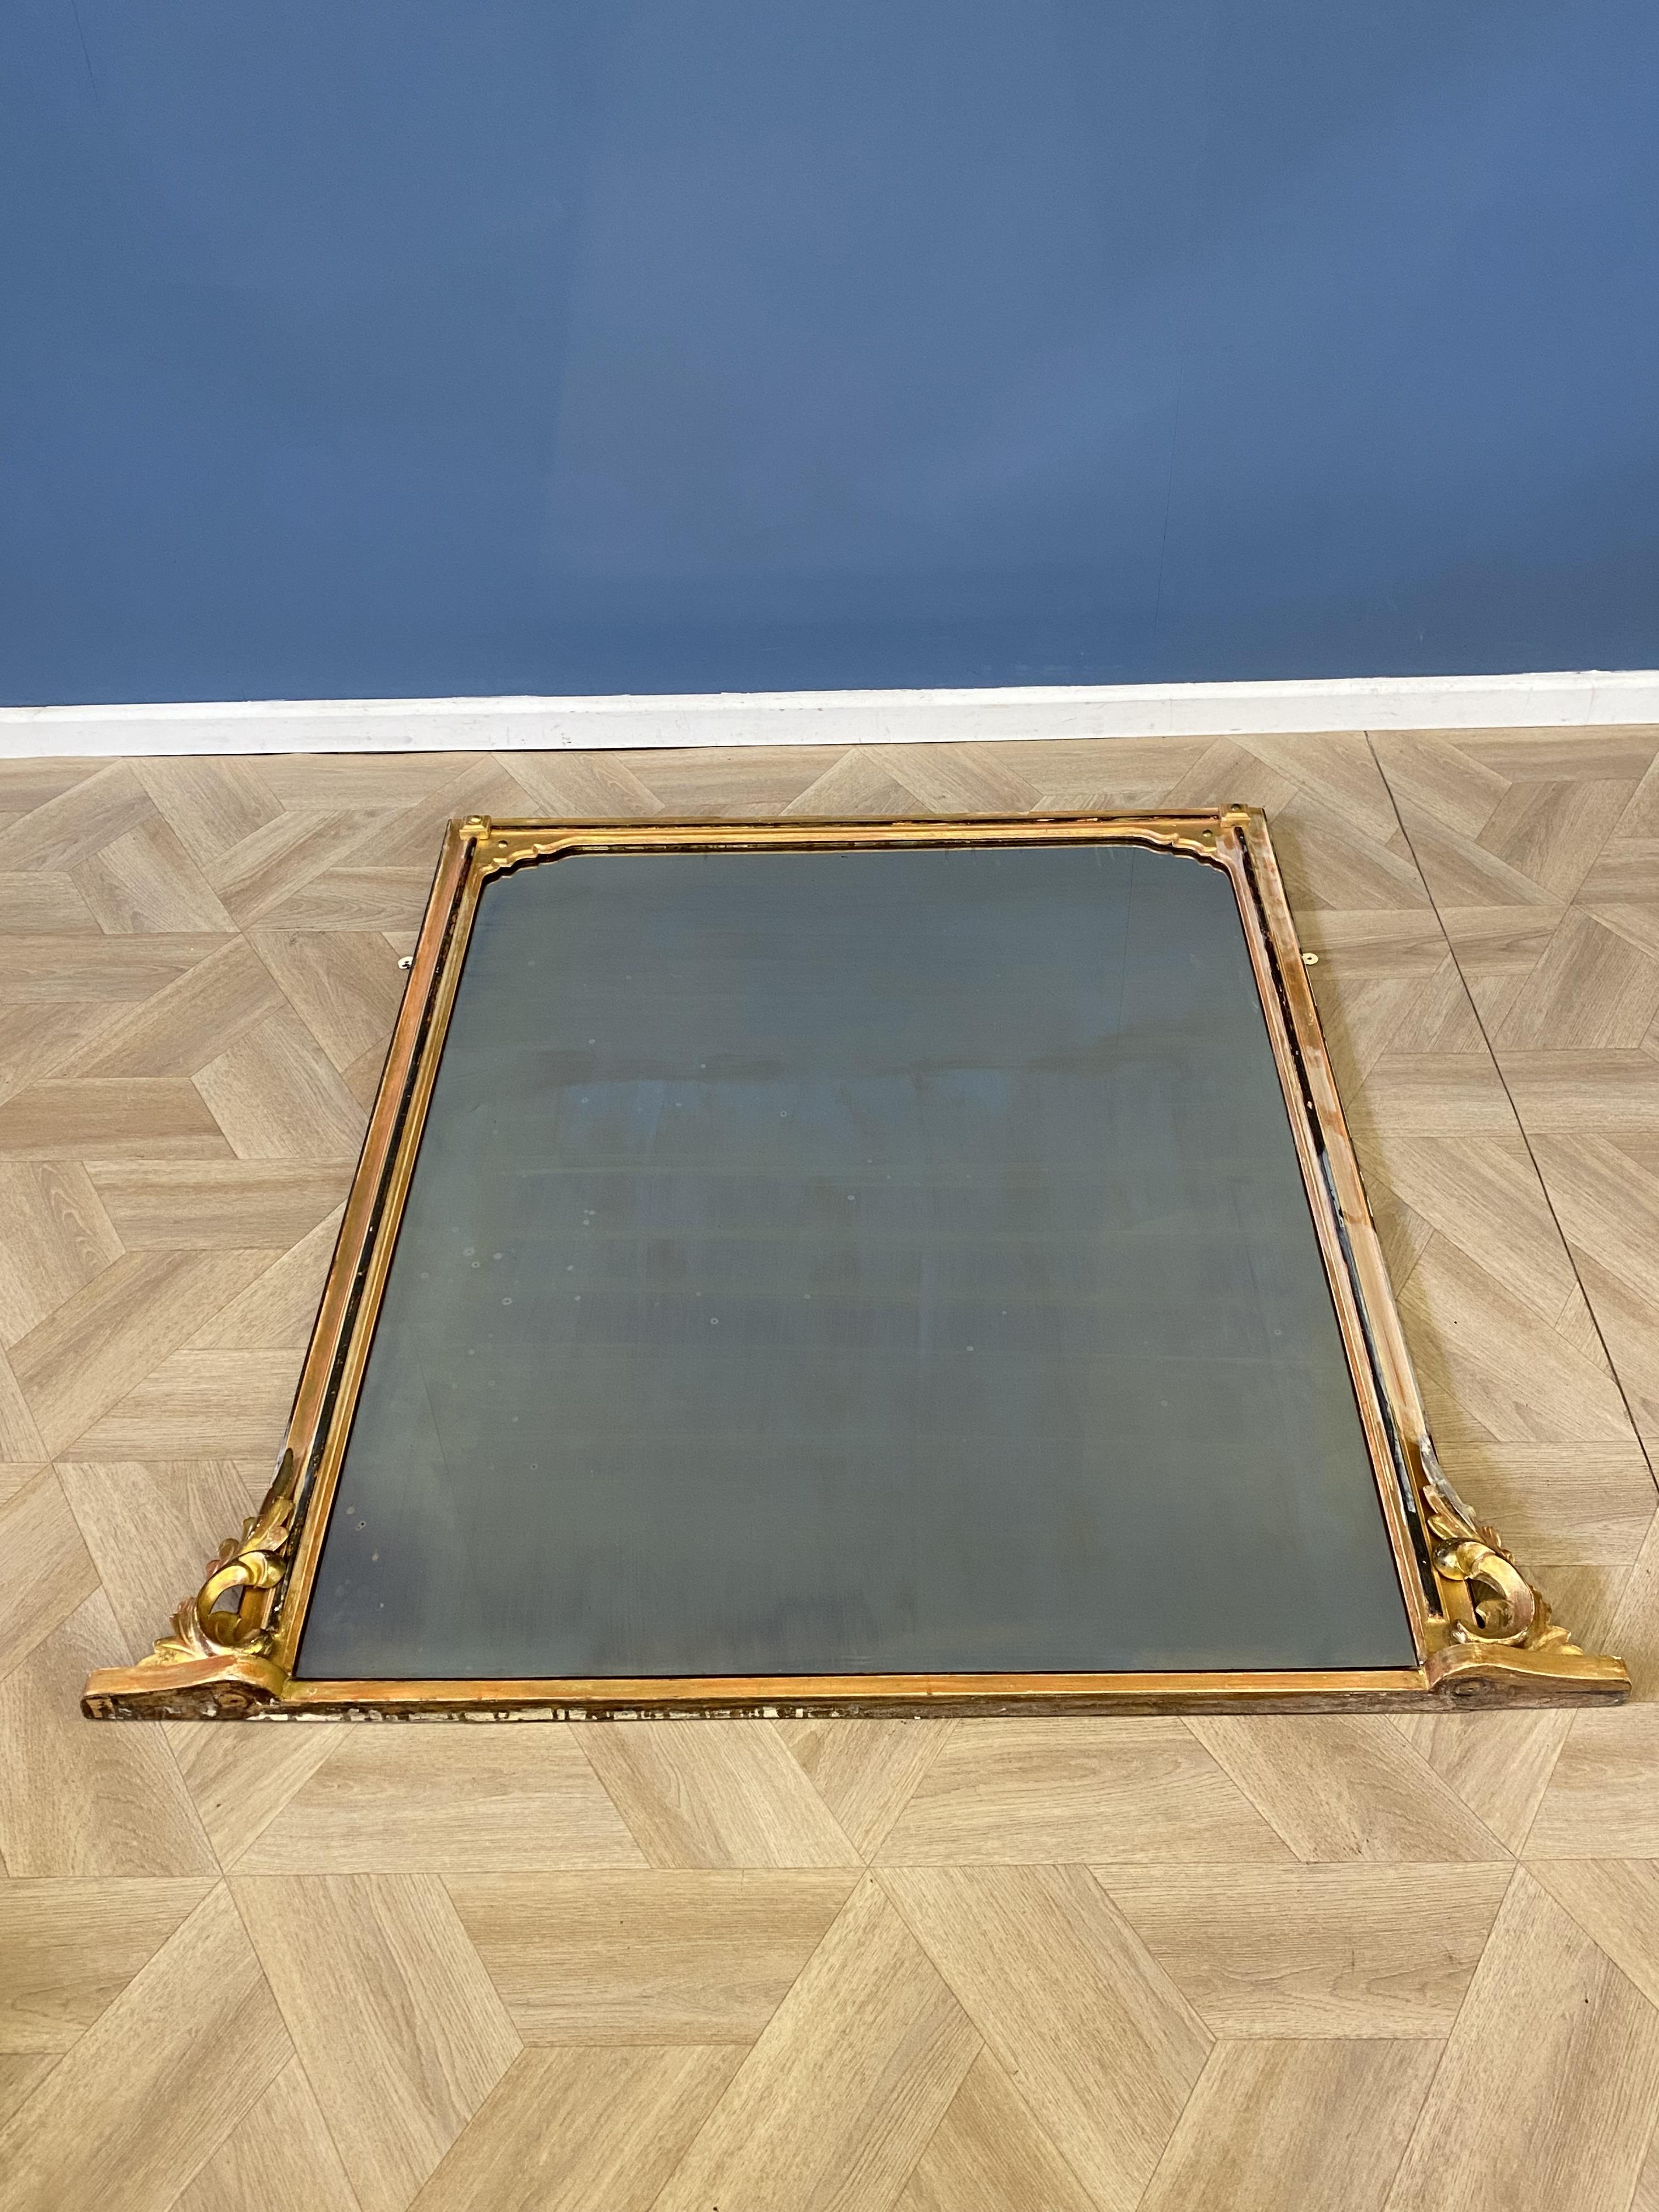 Victorian gilded rectangular overmantle mirror - Image 2 of 8